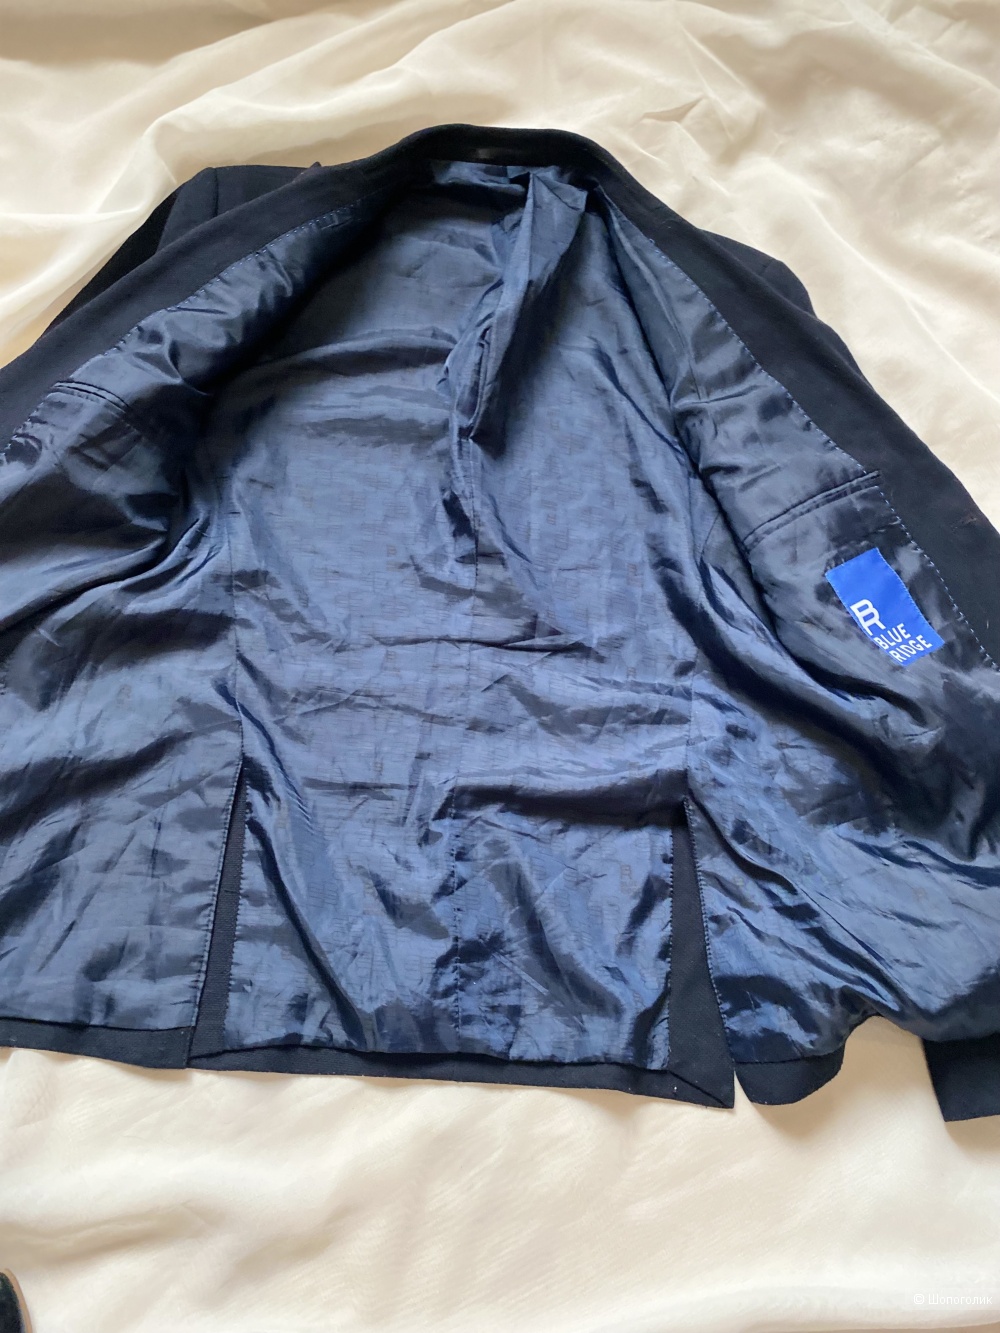 Жакет пиджак Blue ridge, размер M-L